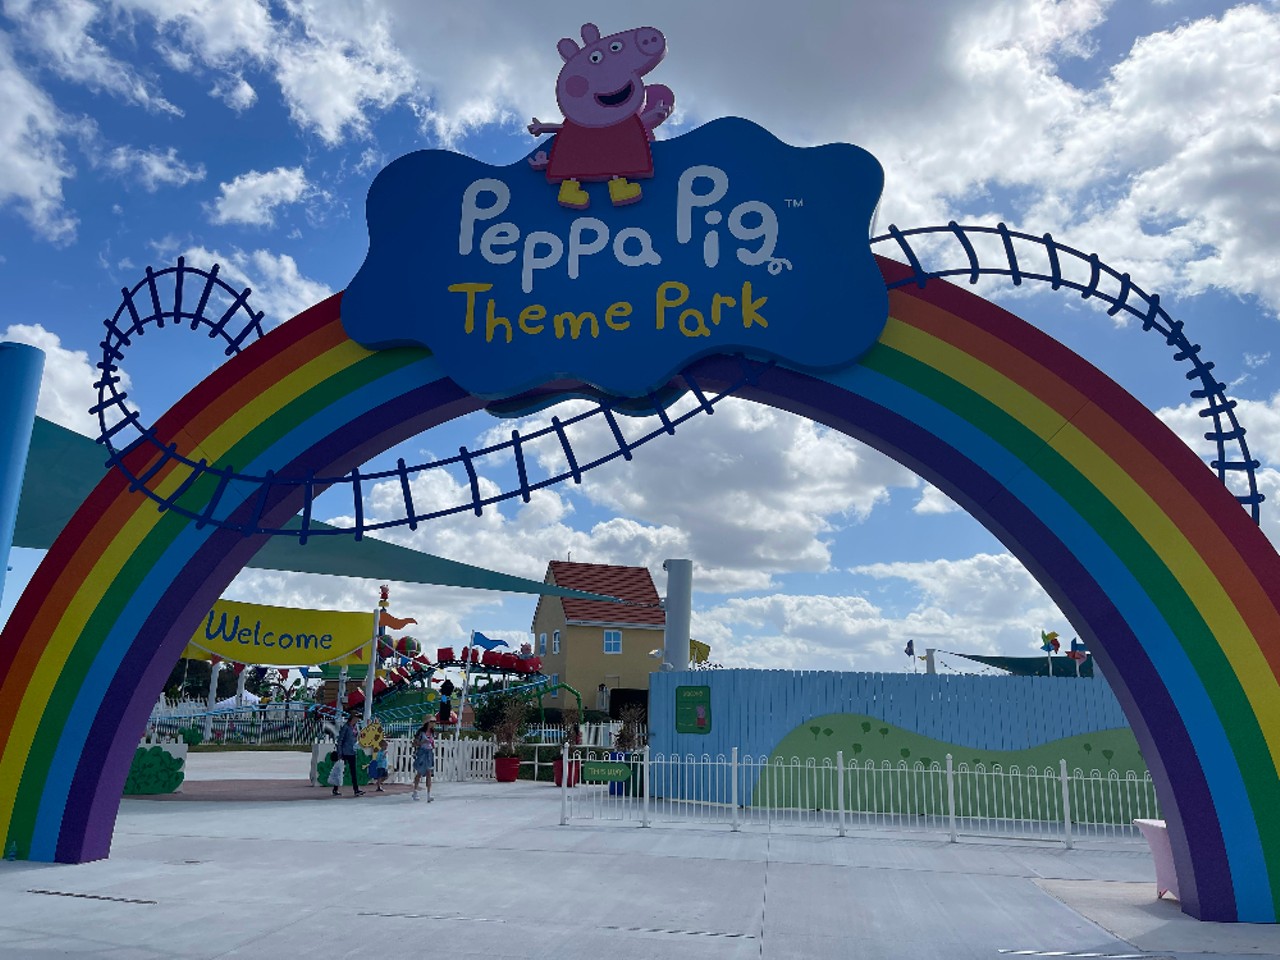 News Flash • Peppa Pig Theme Park